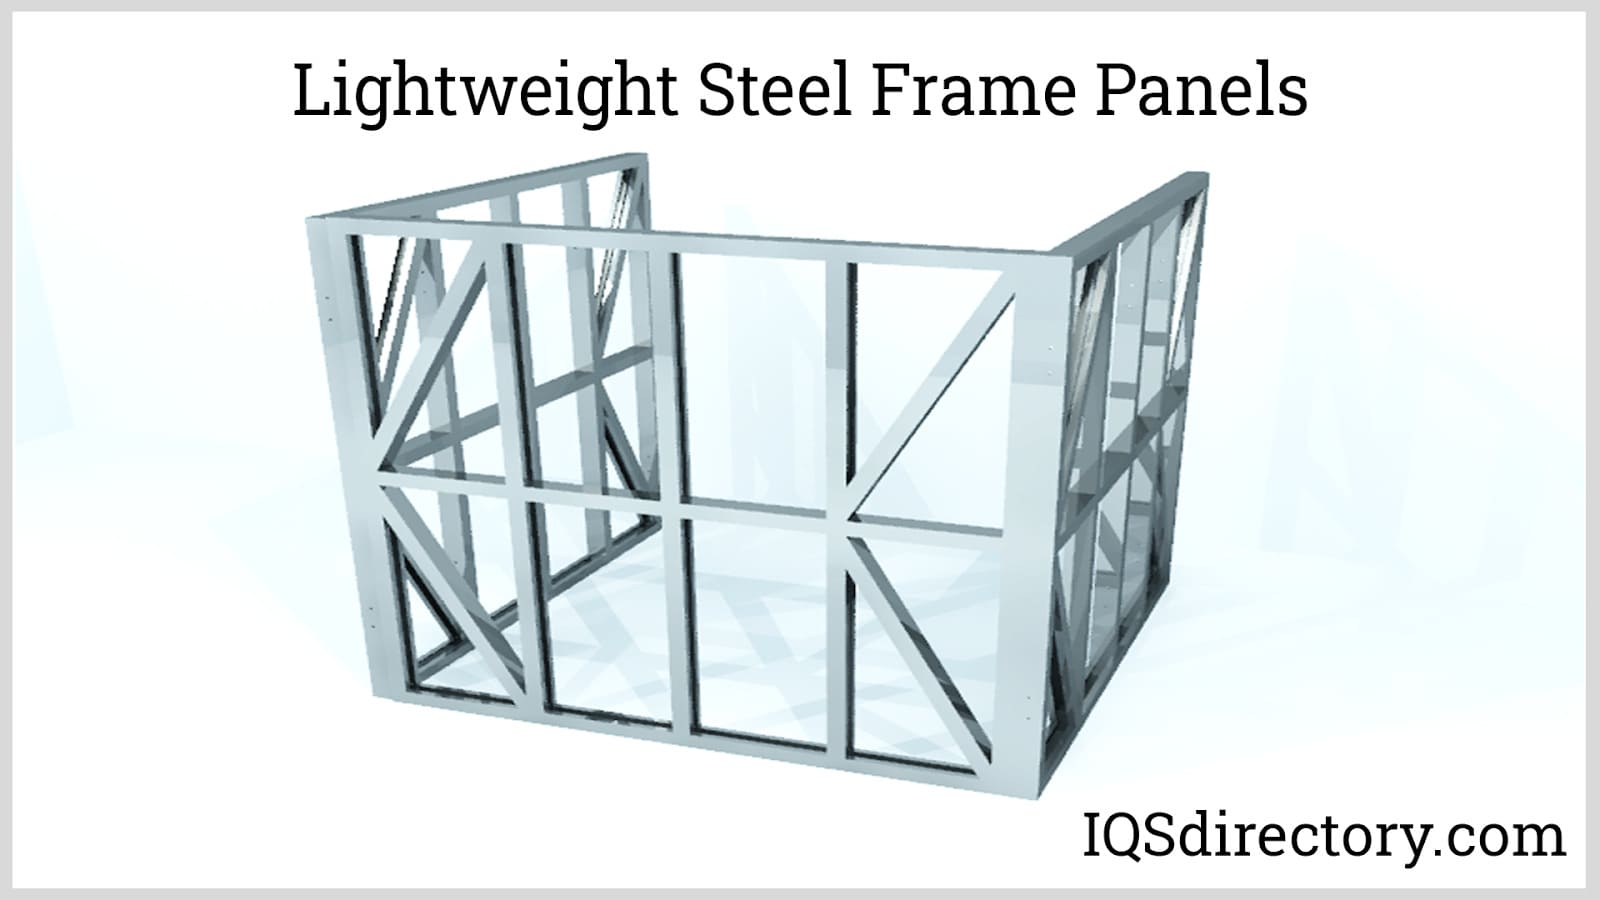 Lightweight Steel Frame Panels